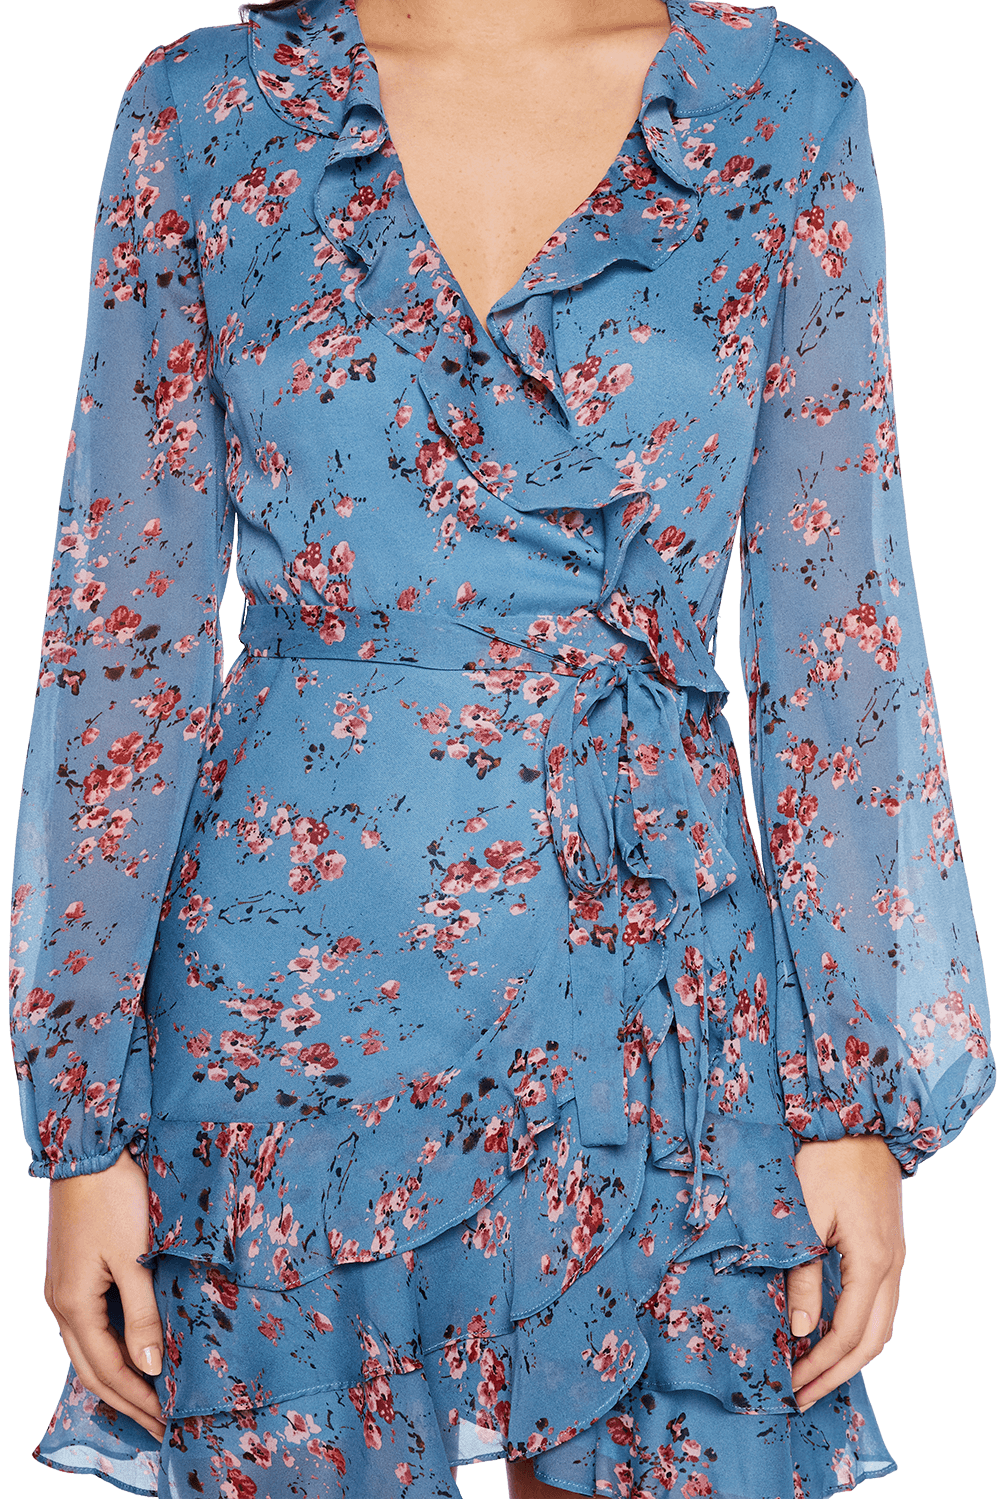 bardot blue rose dress